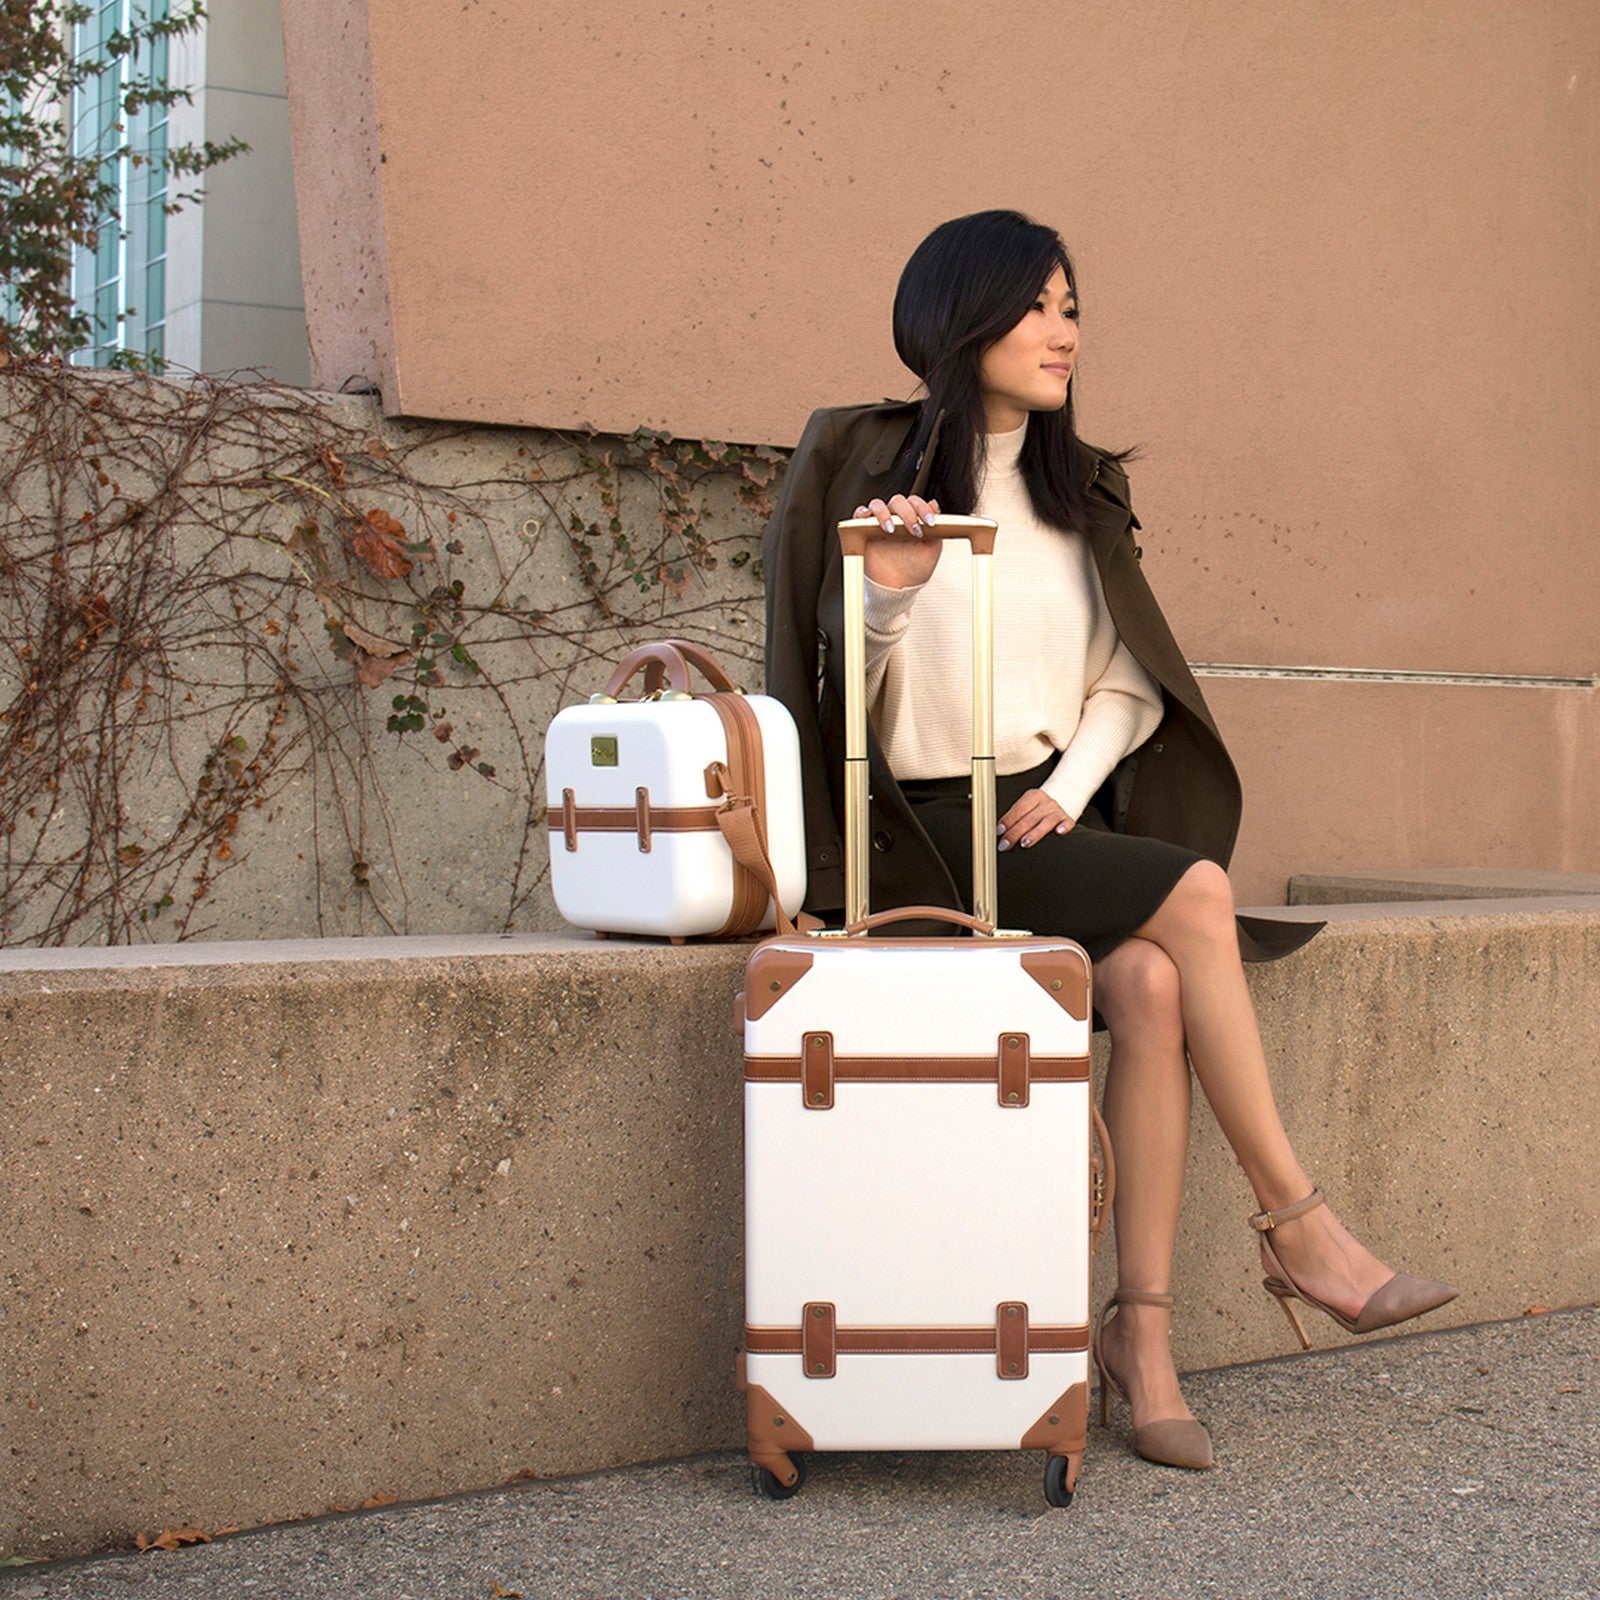 World Traveler Gatsby Luxury Trunk 2-Piece Spinner Carry-On Luggage Set